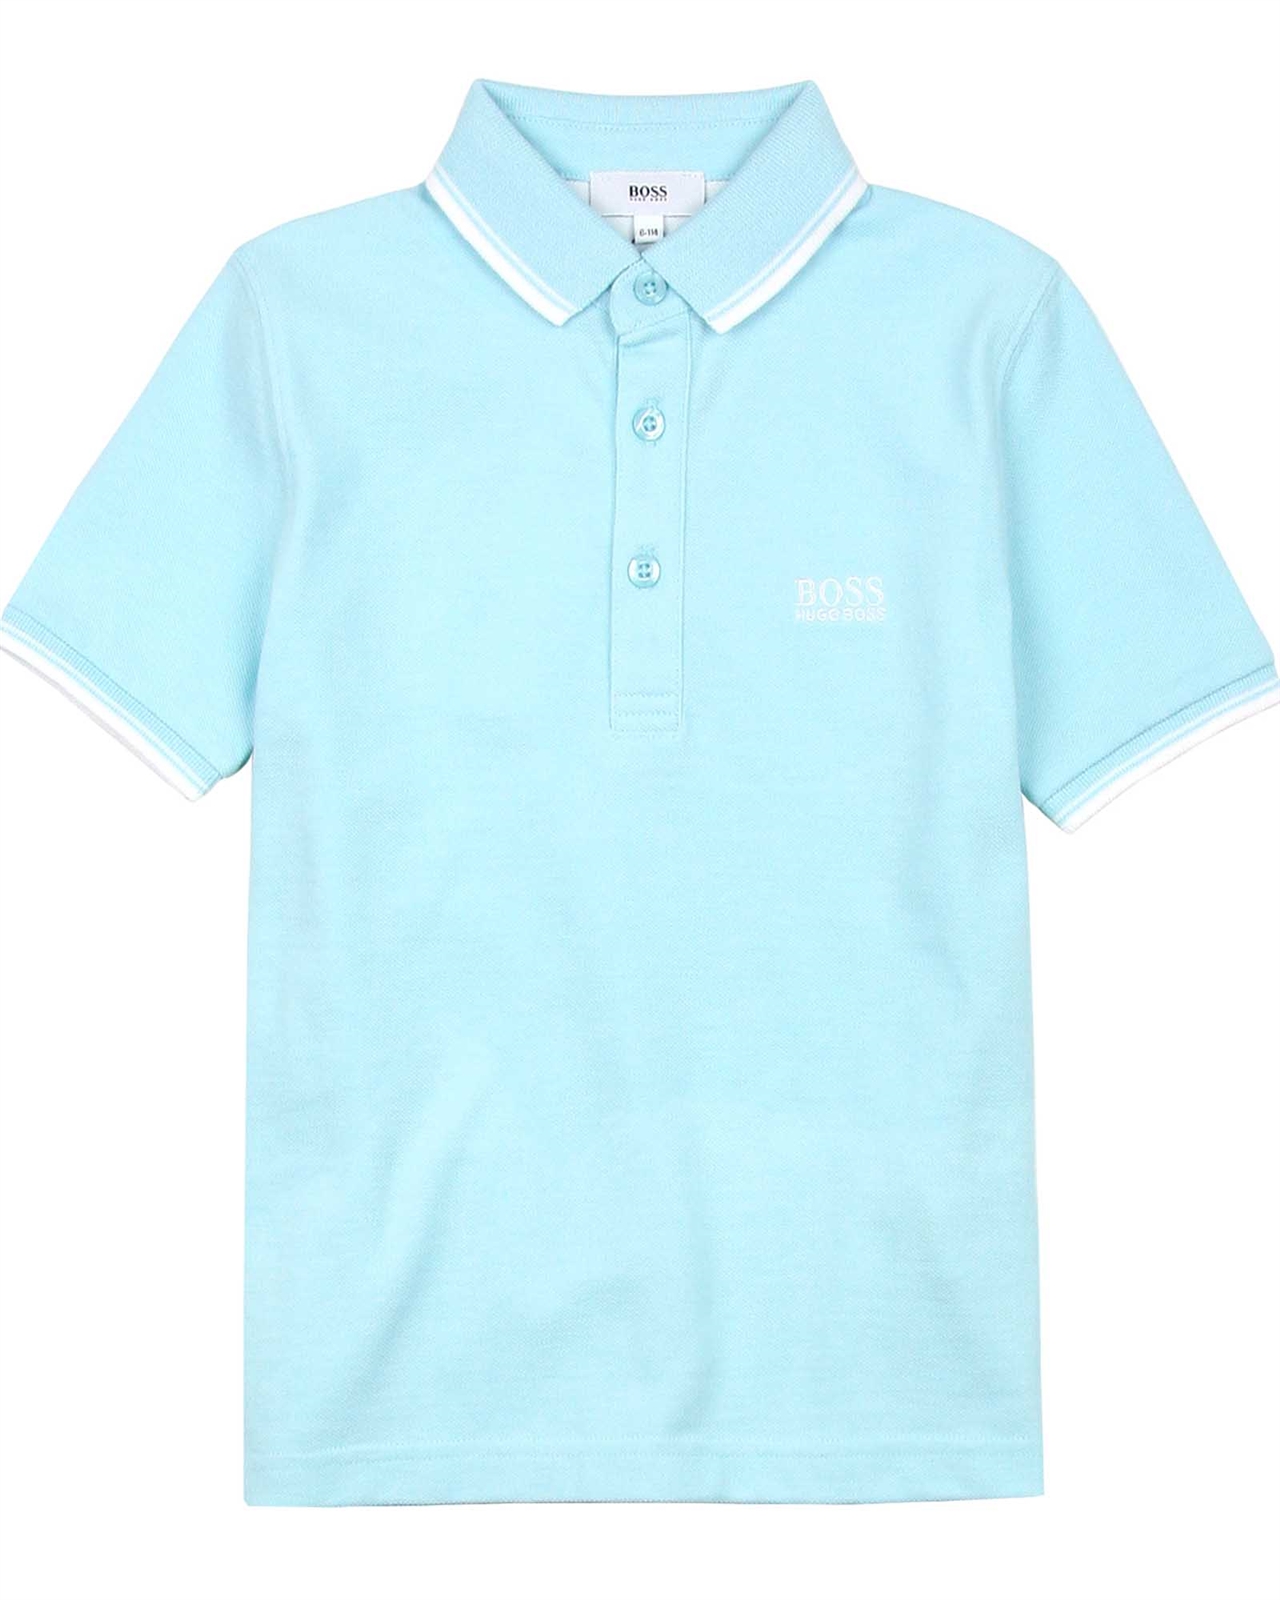 BOSS Boys Basic Polo Shirt in Light Blue - BOSS - BOSS Boys Clothes ...